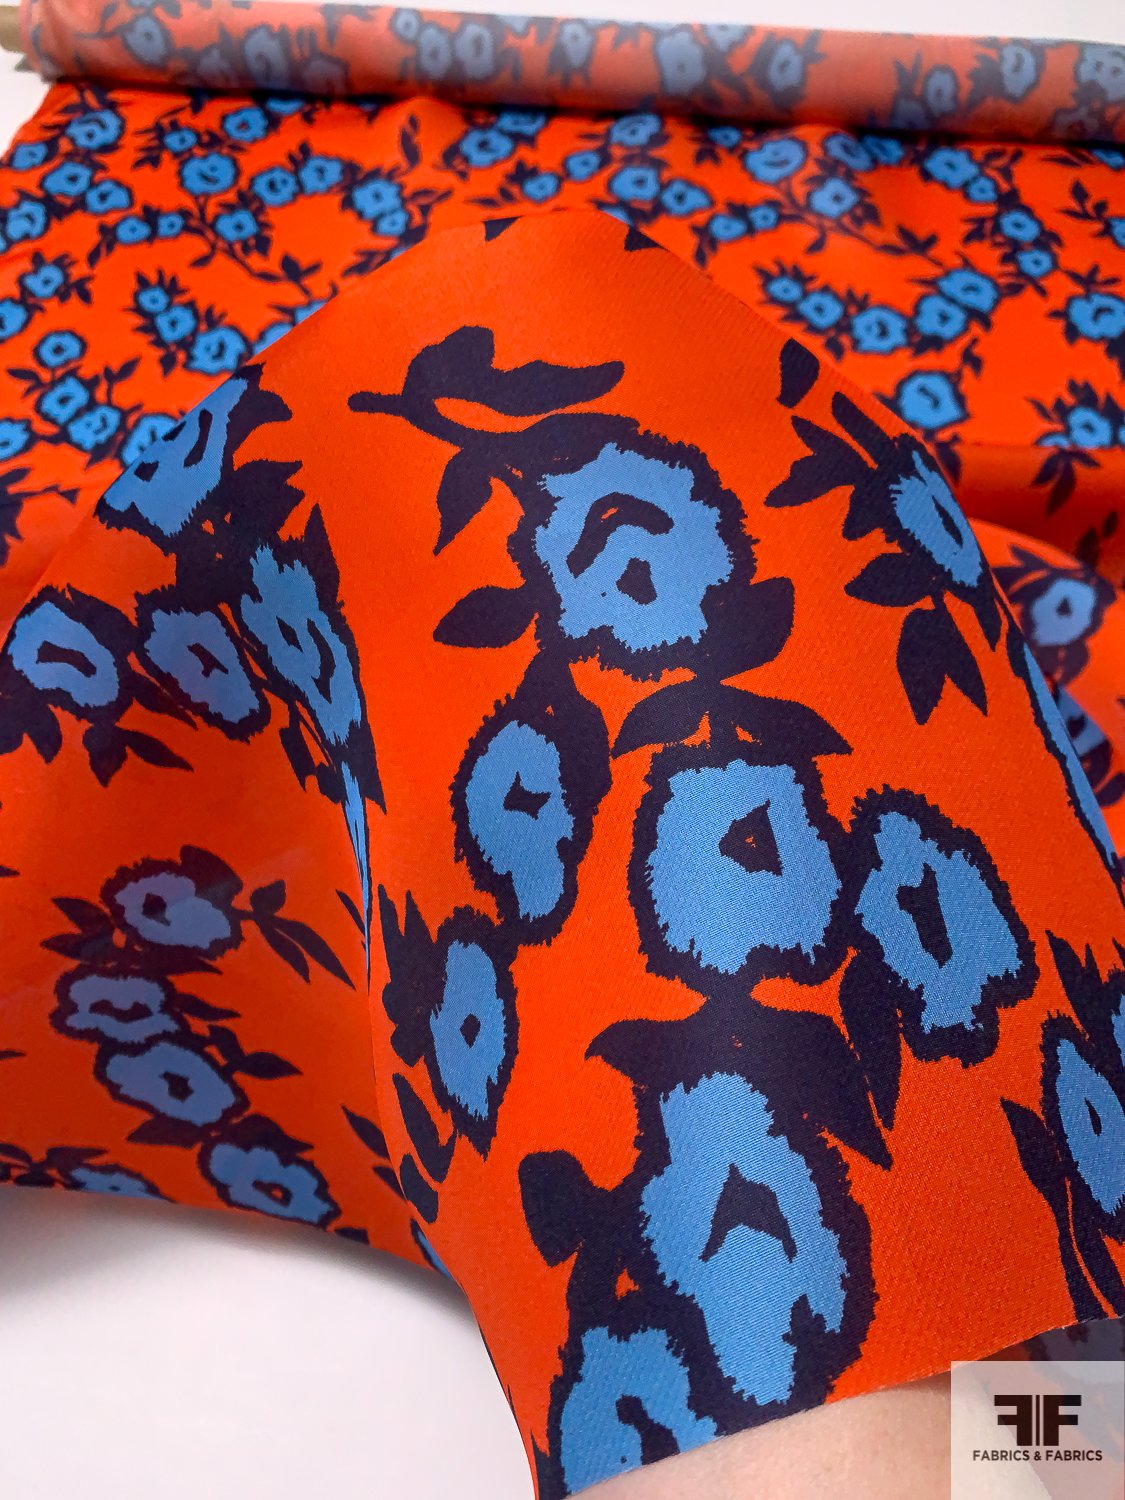 Carolina Herrera Playful Floral Printed Silk Gazar - Blood Orange / Blue / Navy